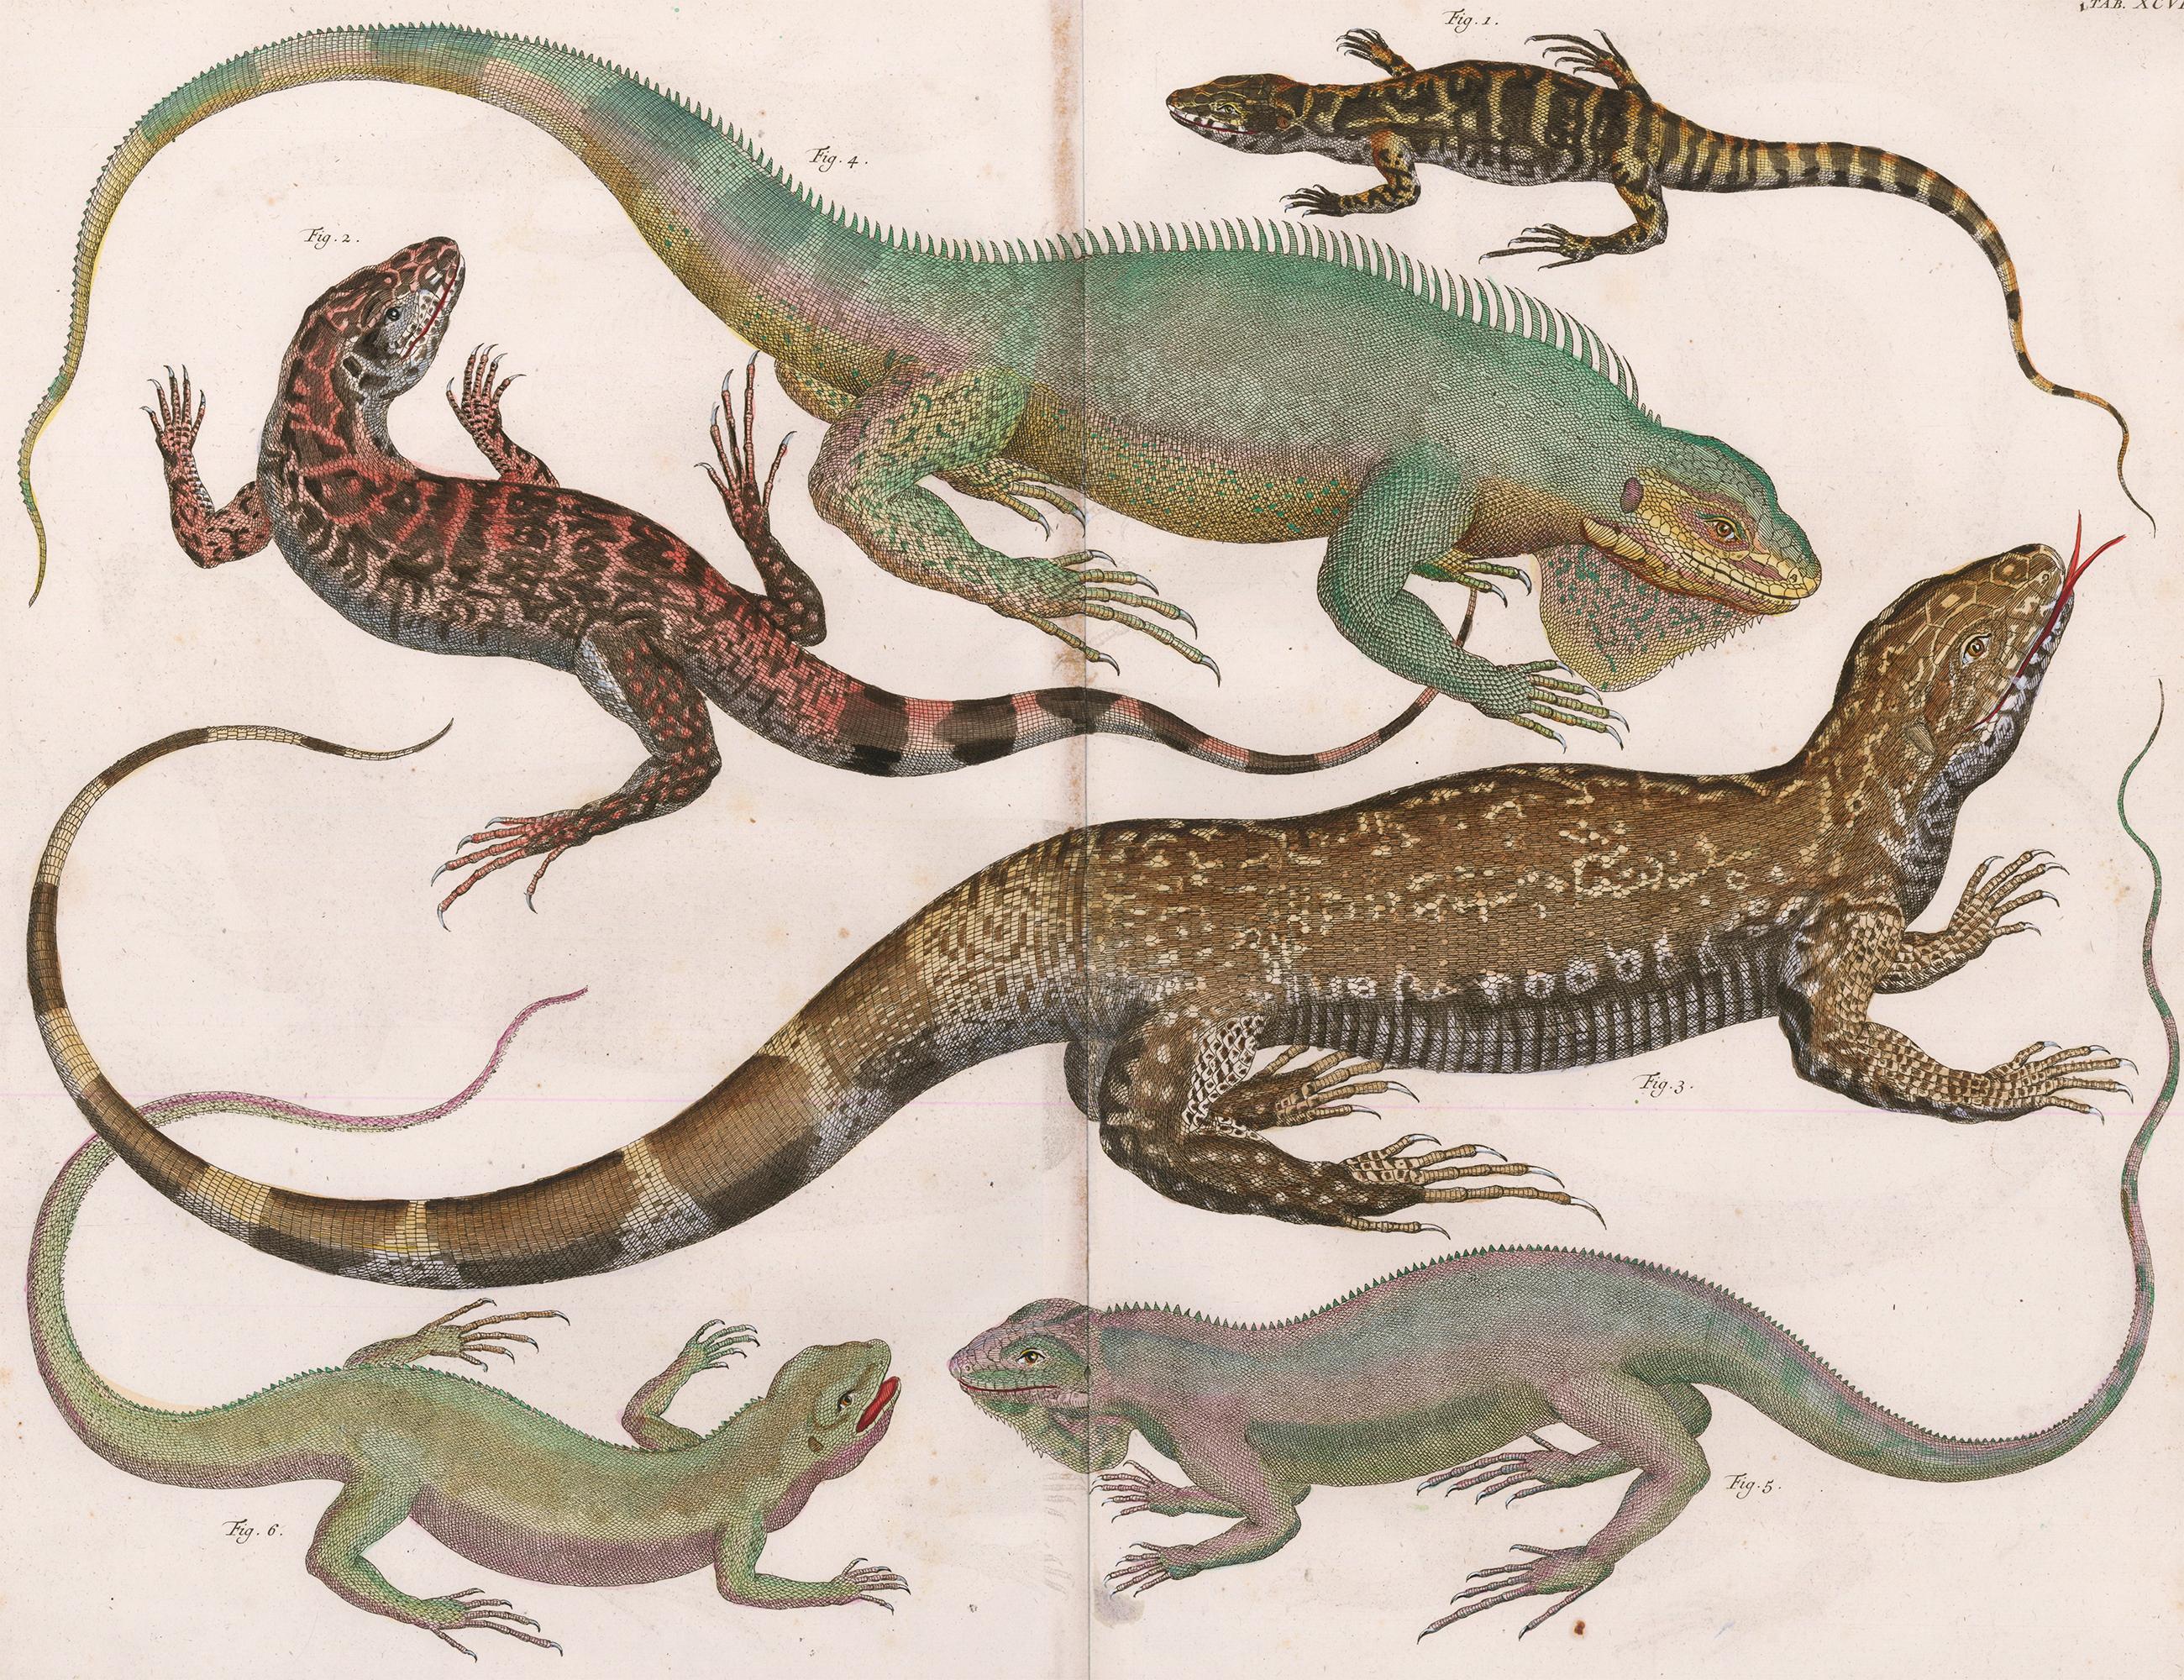 Bengal Monitor and Iguana Engraving - Print by Albertus Seba